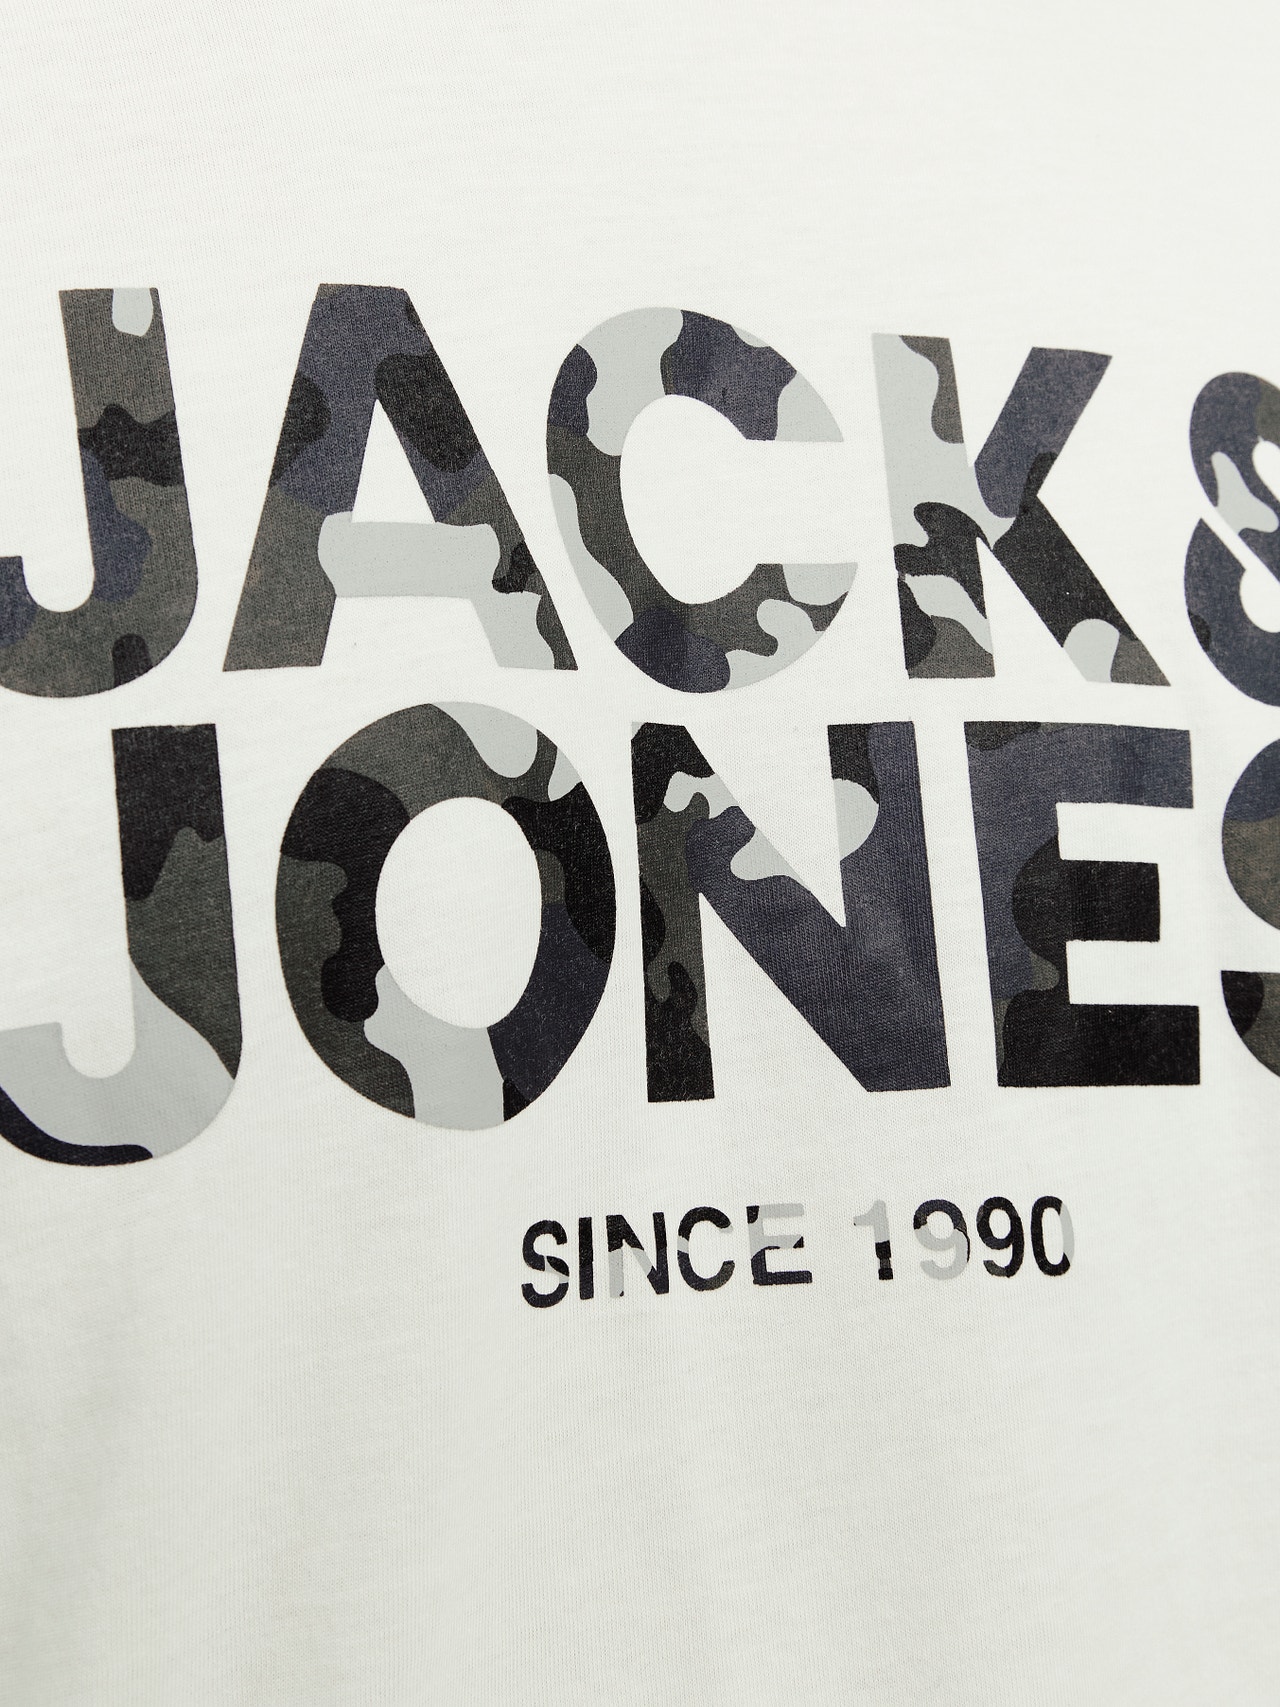 Jack & Jones Camiseta Logotipo Cuello redondo -Cloud Dancer - 12266155